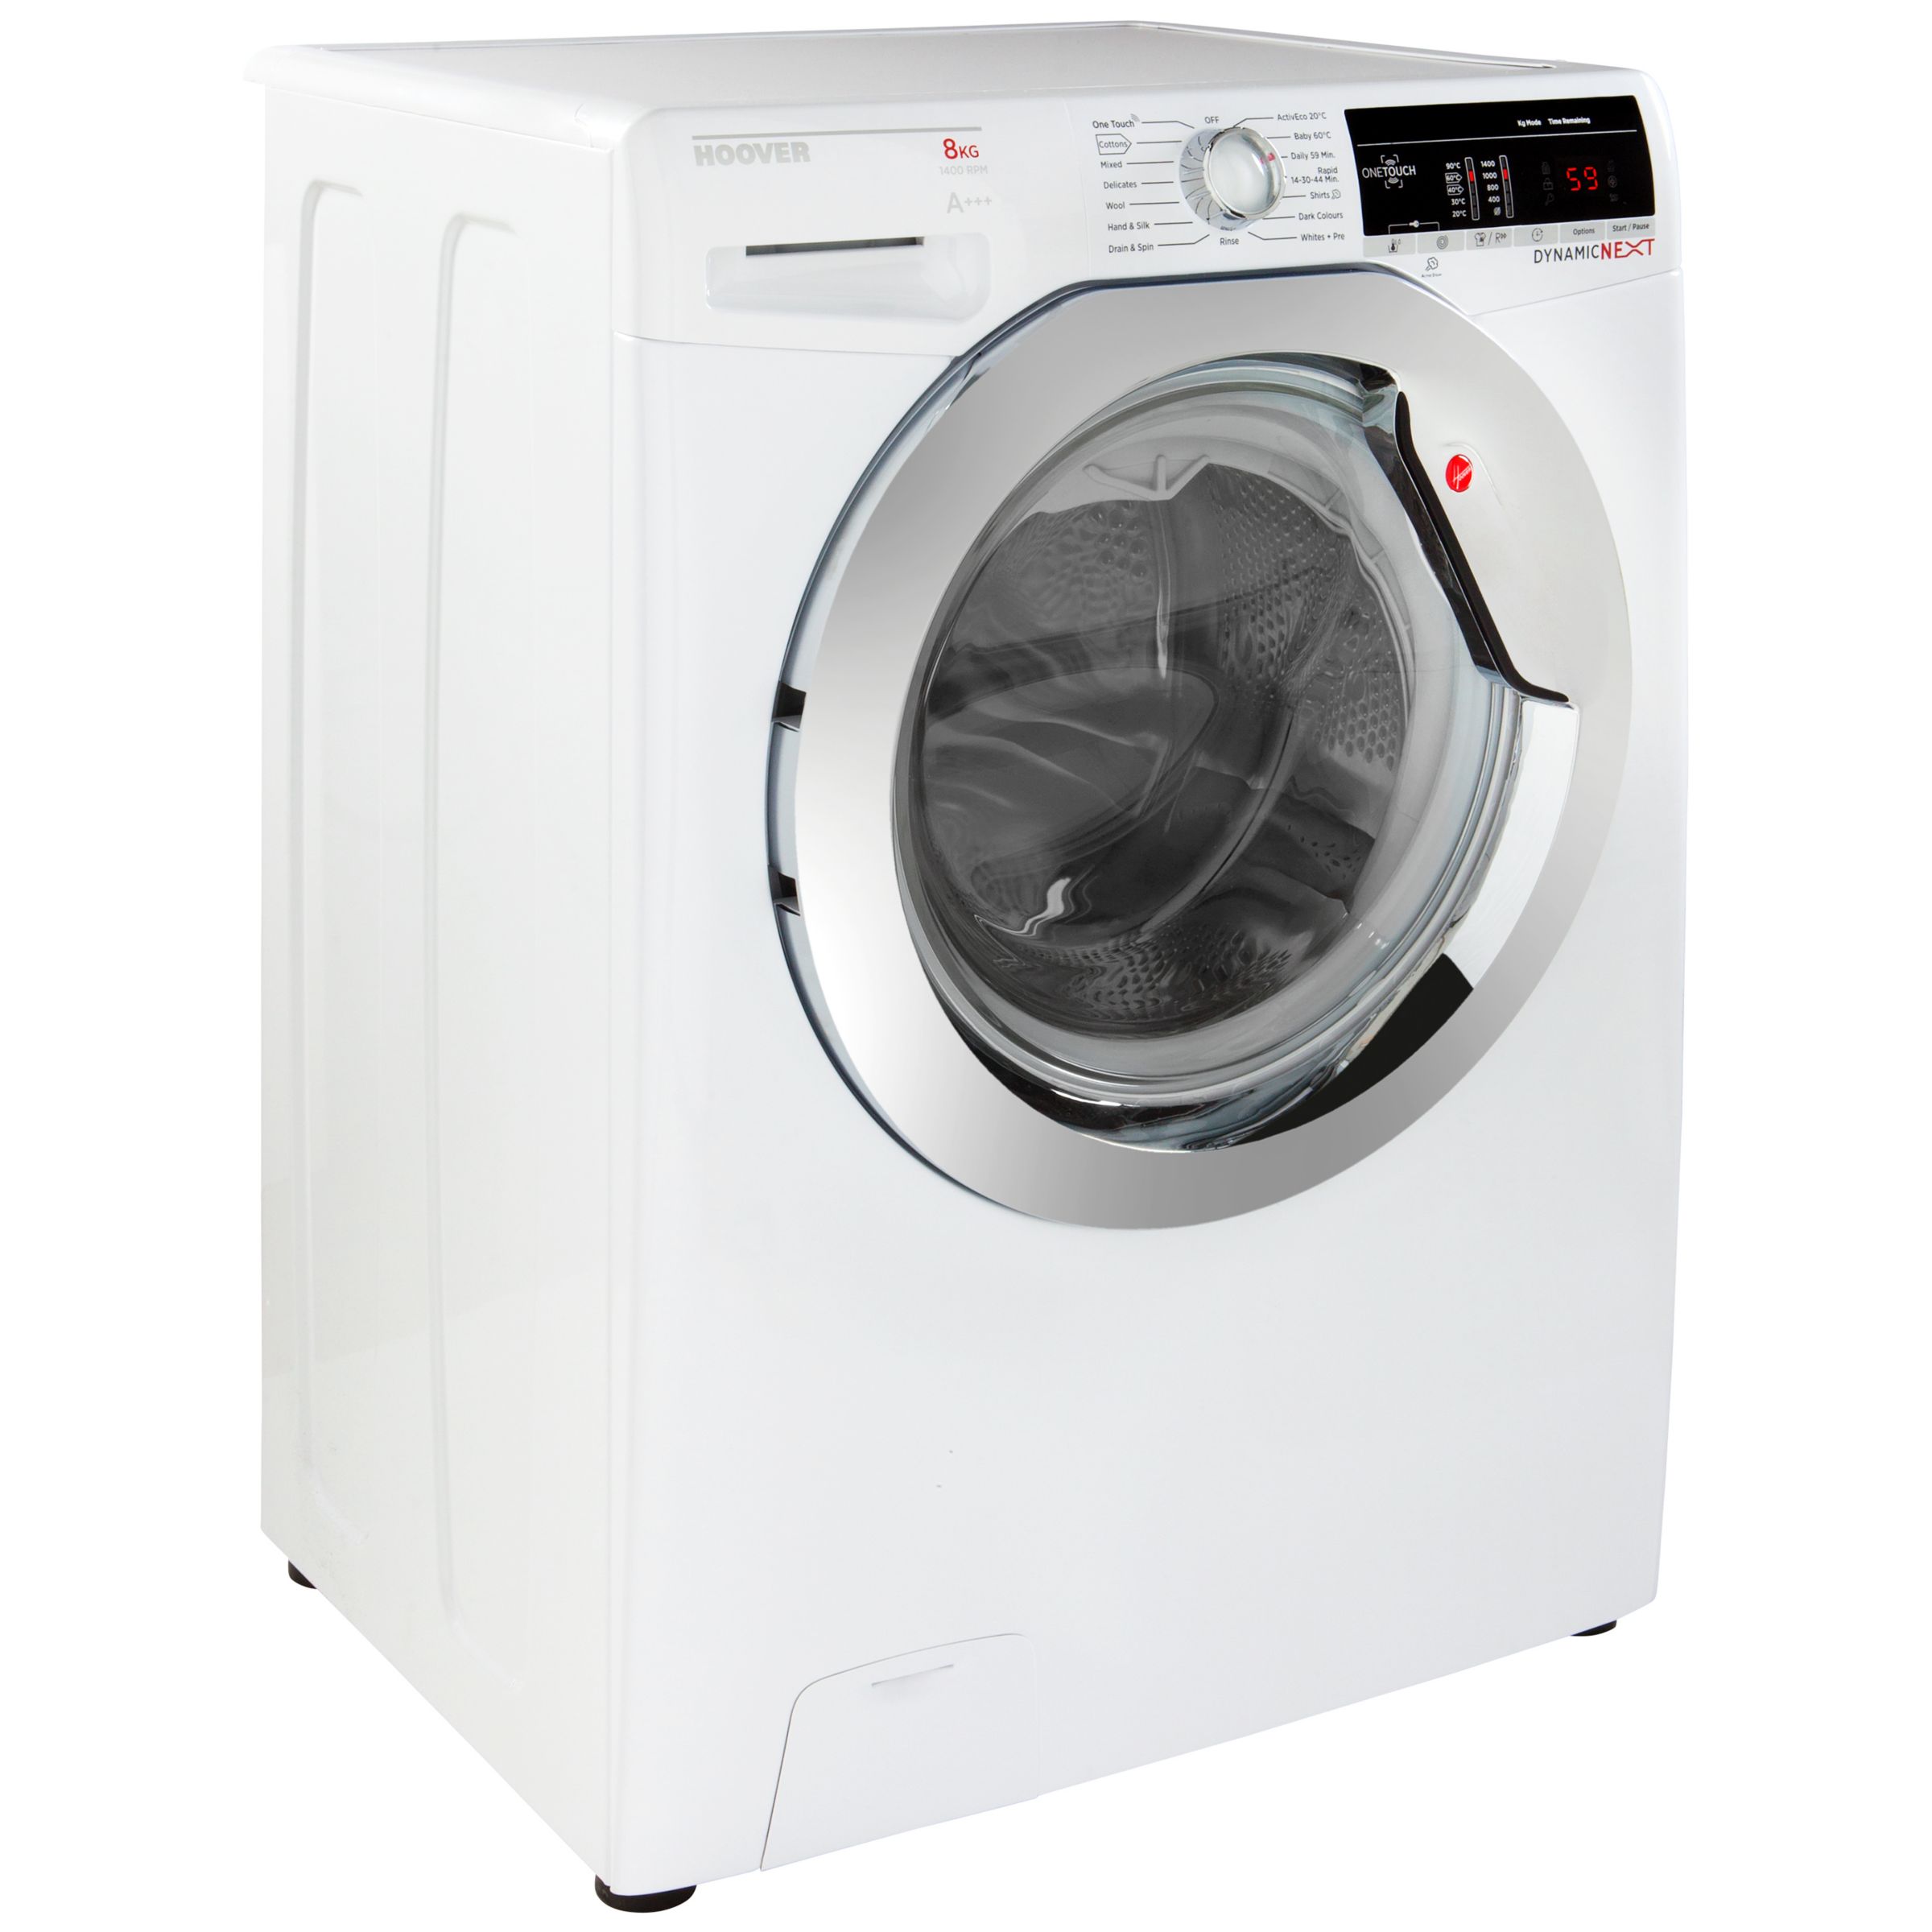 Hoover Dynamic Next DXOA48C3 Freestanding Washing Machine, A+++ Energy Rating, 8kg, 1400rpm, White